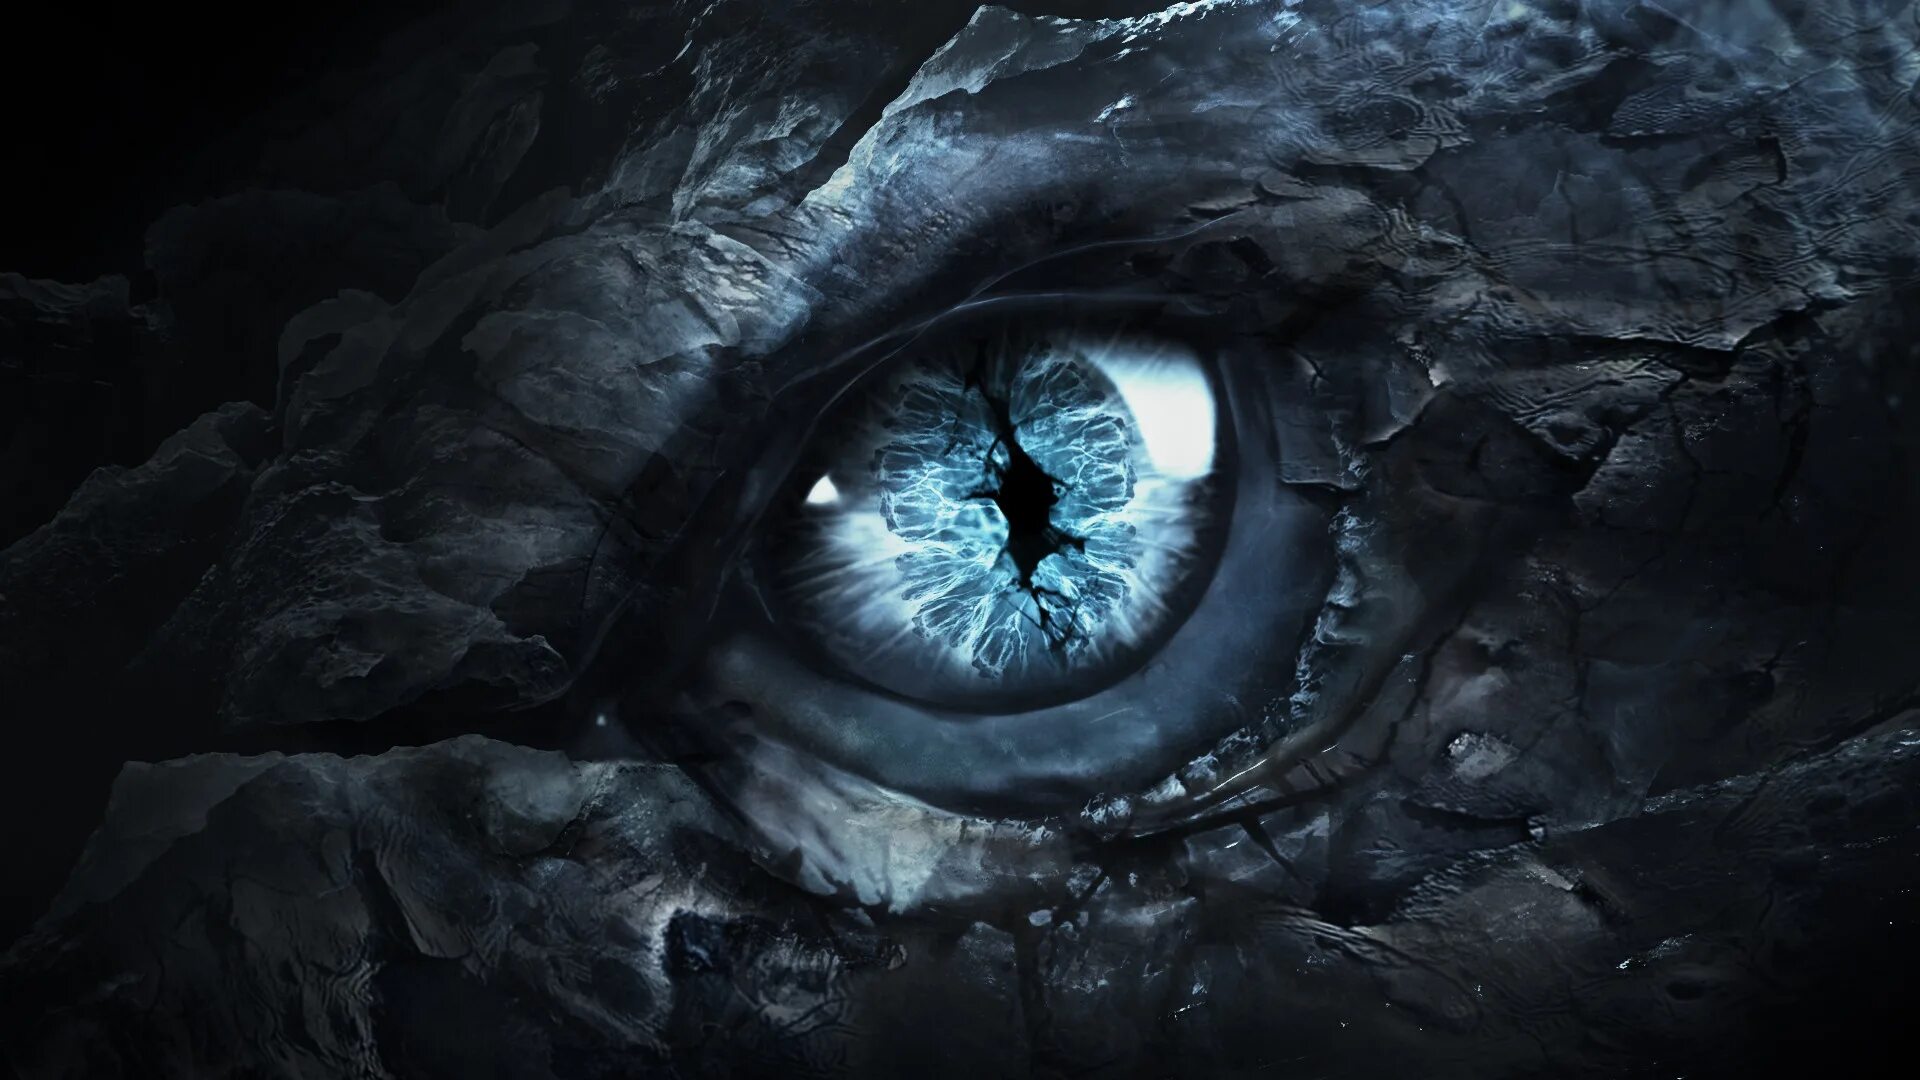 Глаза дракона (Dragon Eyes). Игра престолов трон глаза дракона. Синий глаз дракона. Глаз дракона фэнтези.